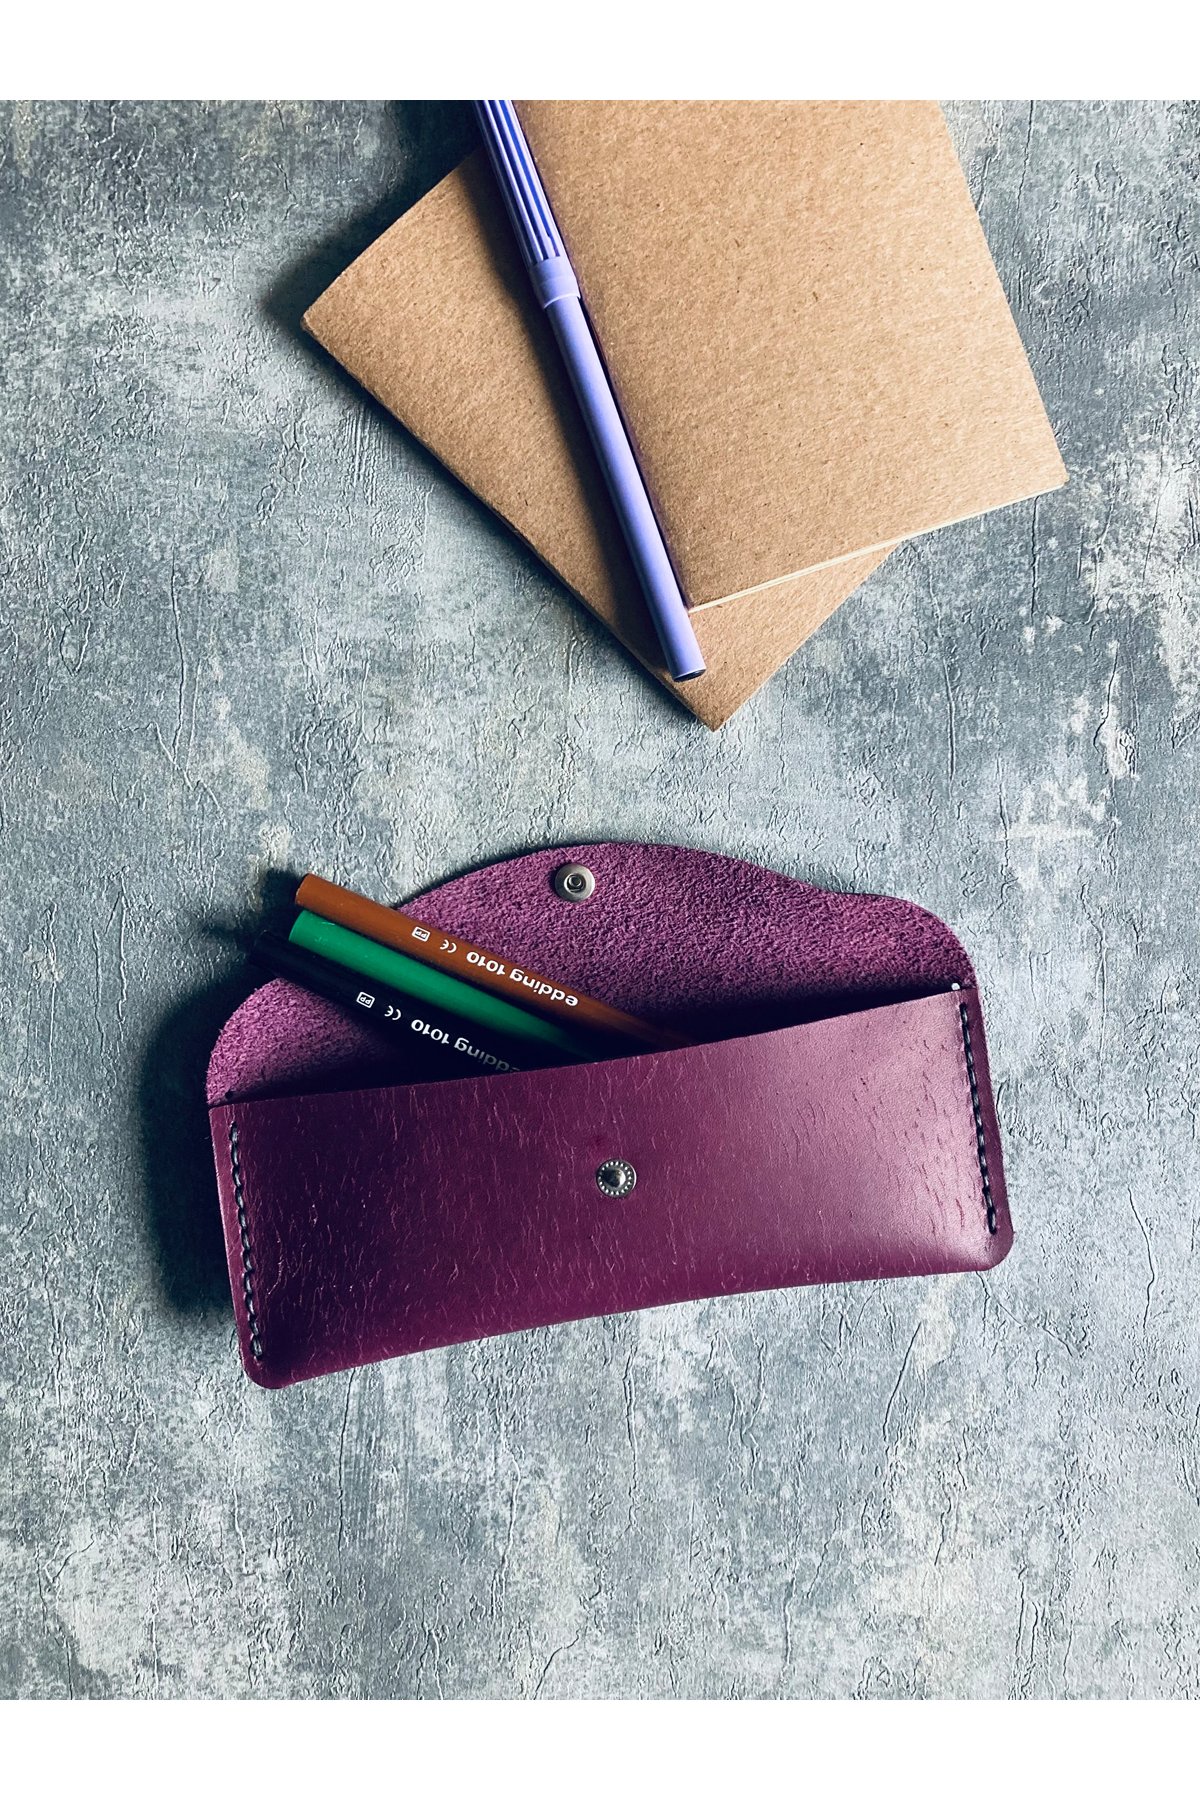 Set of 4 Pen Holder - Purple Leather | Bretya Leather